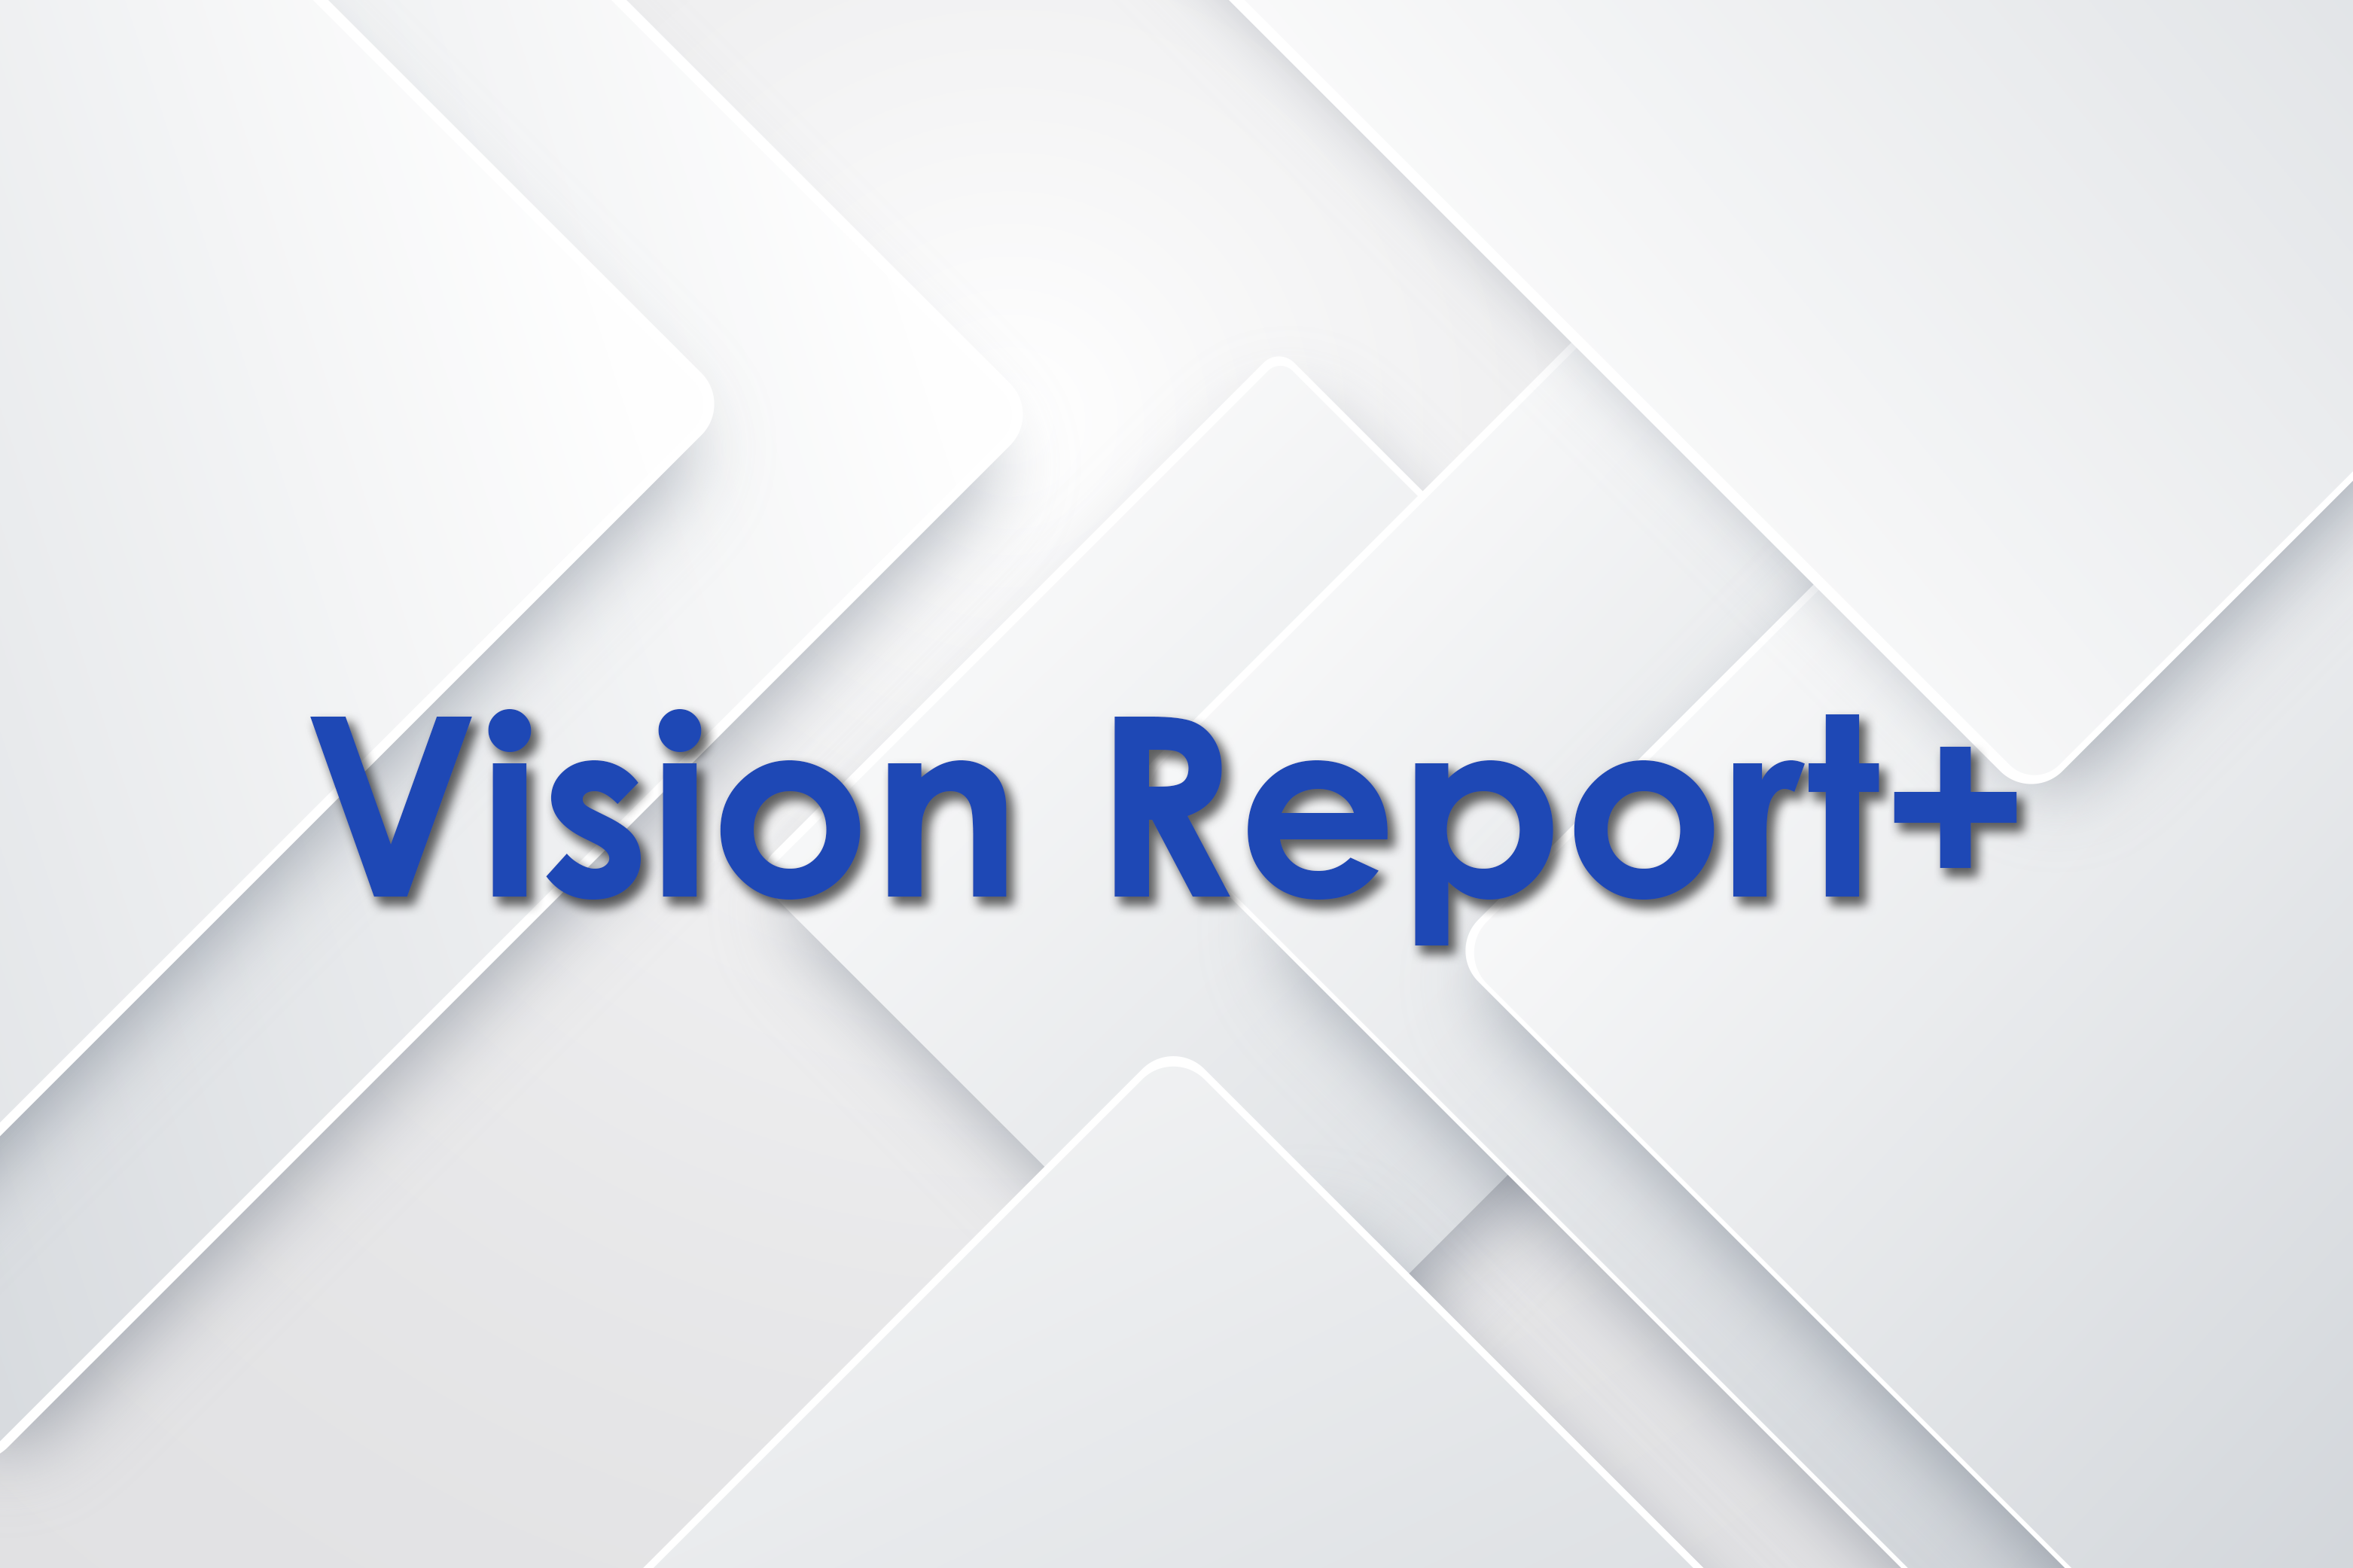 Vision Report+